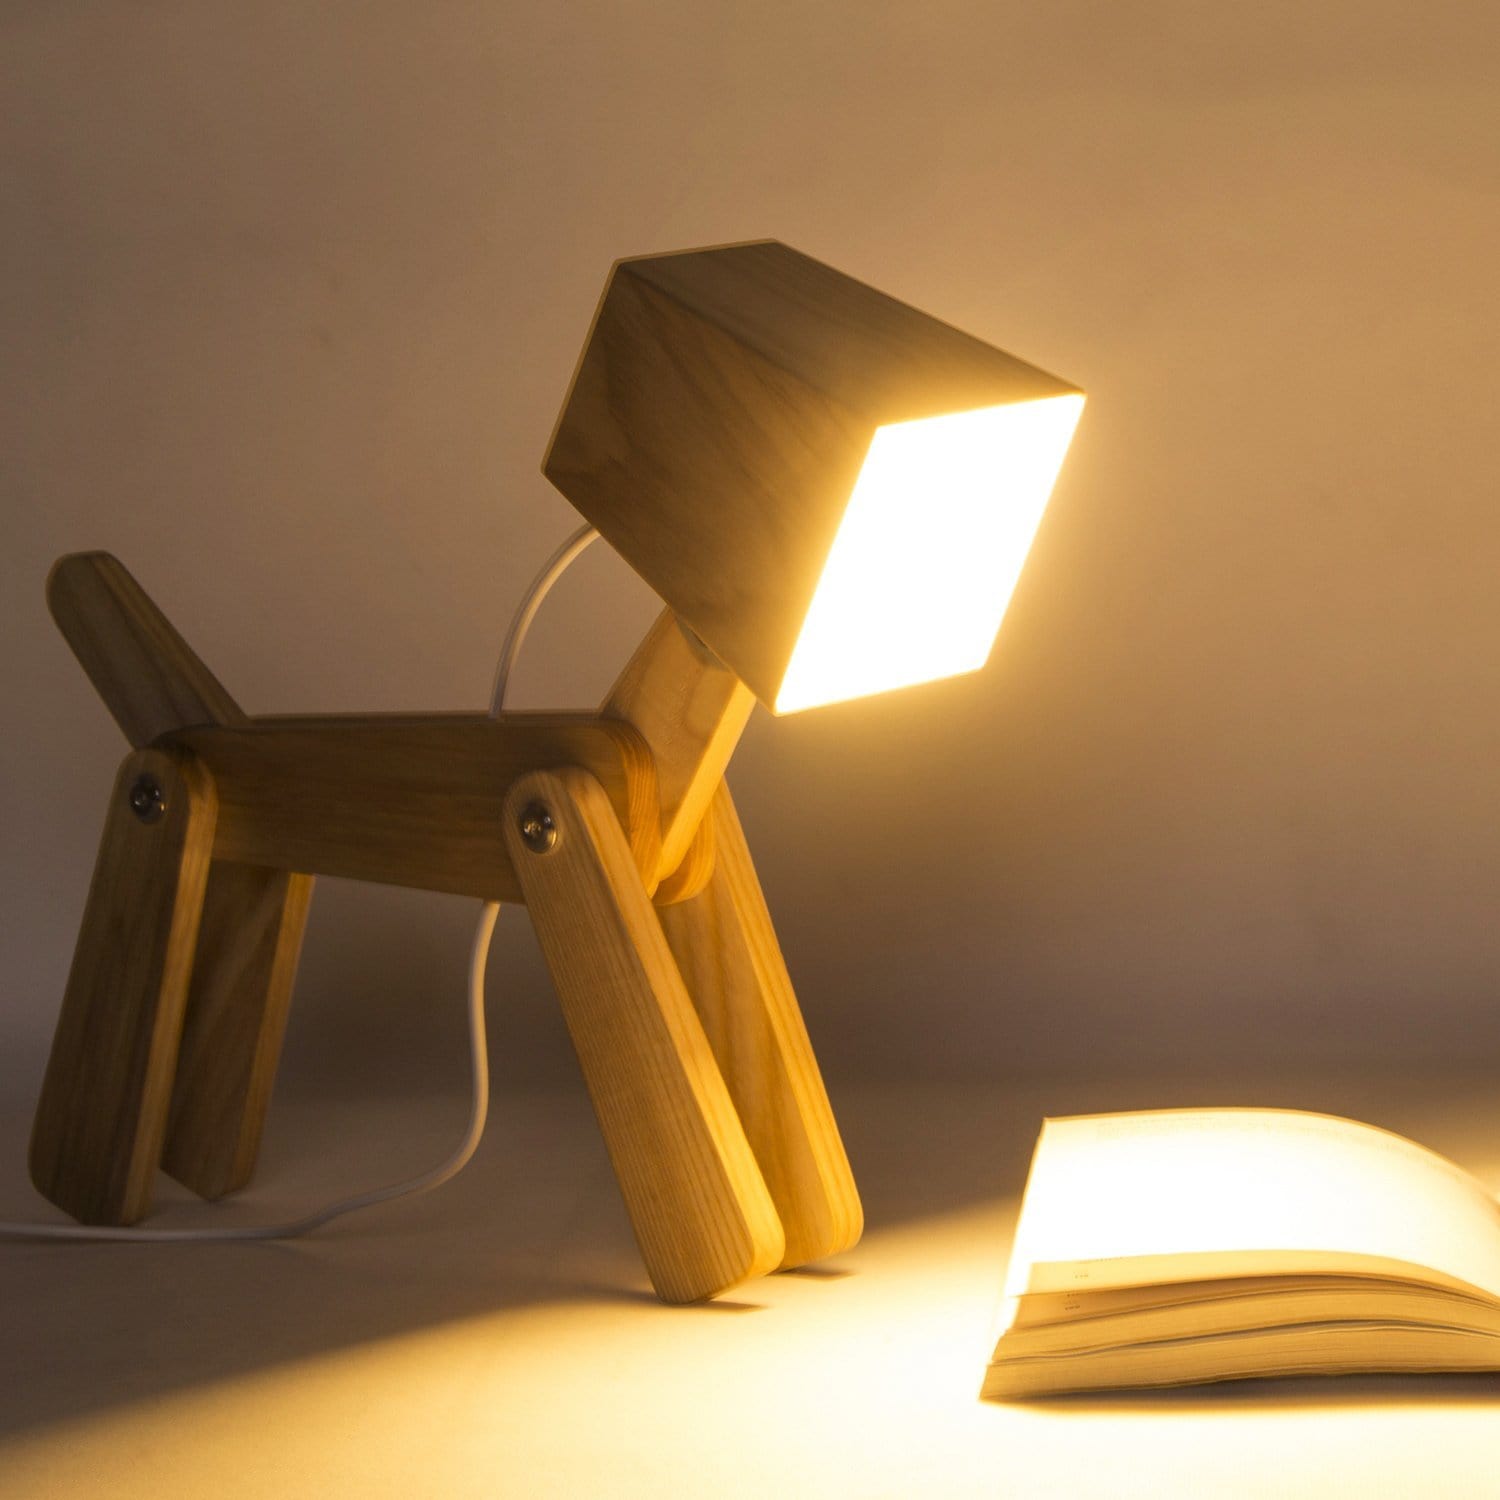 Wooden Dog-Shaped Study lamp